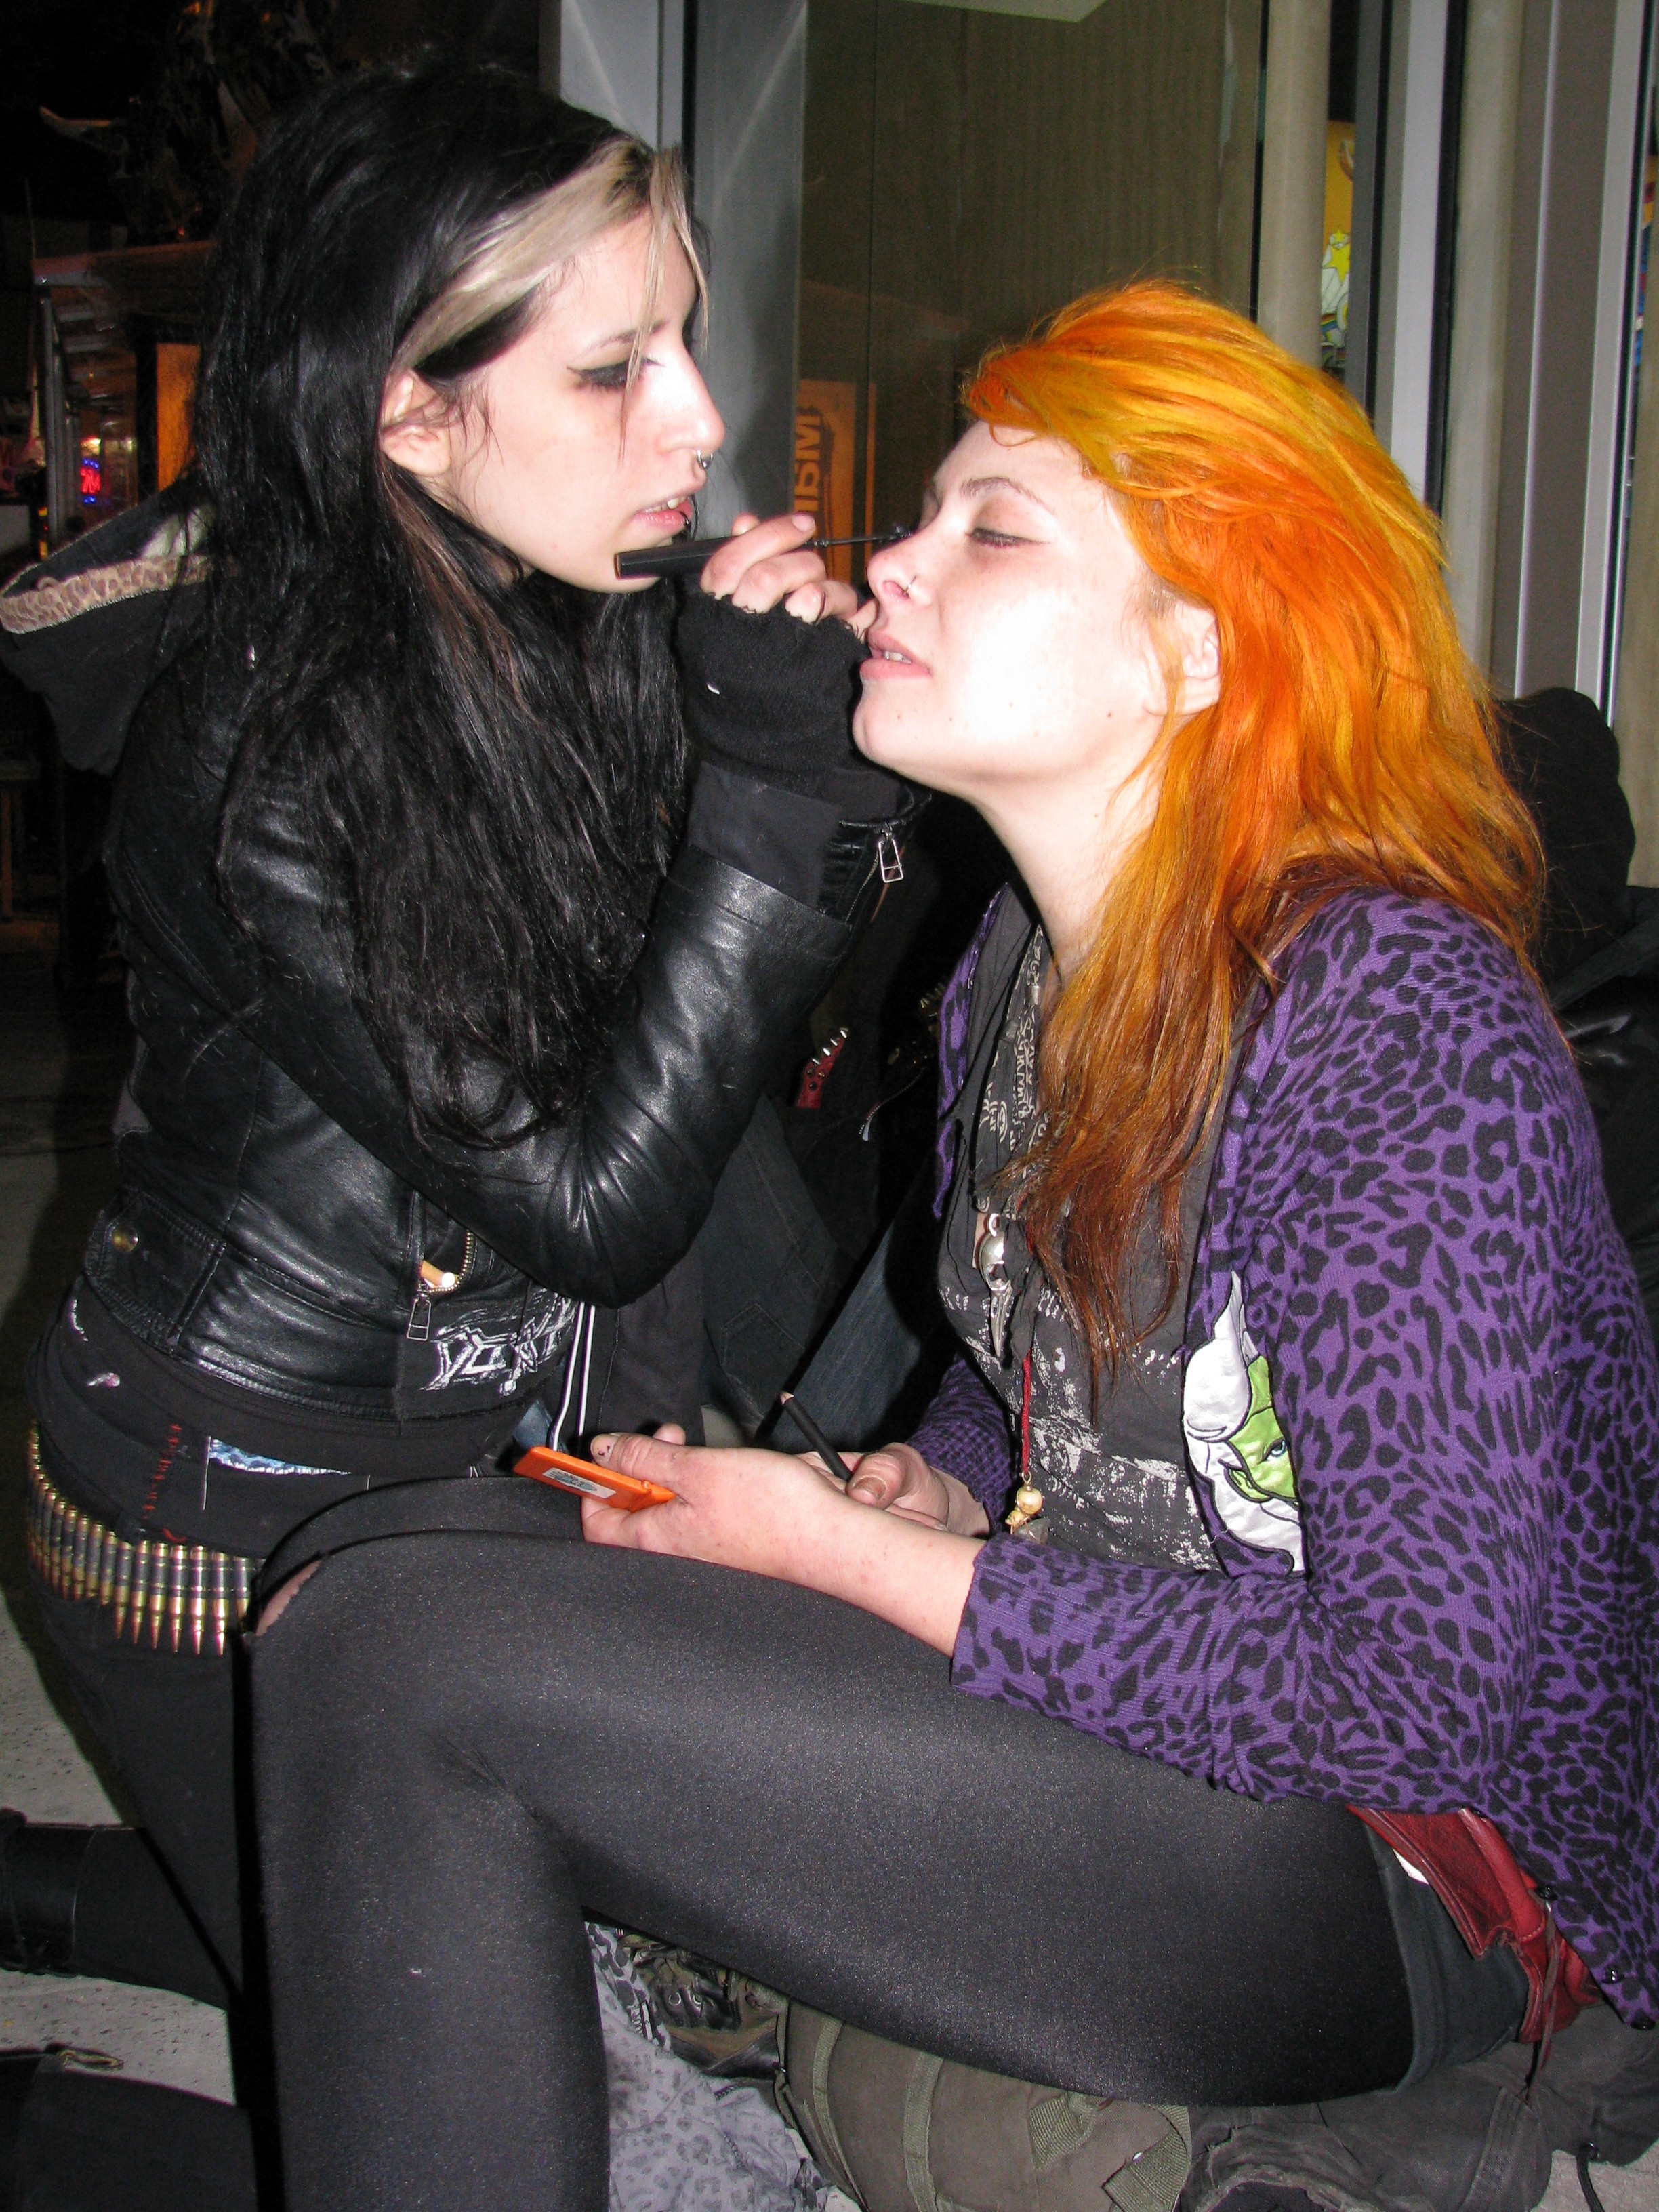 metal girls putting makeup on